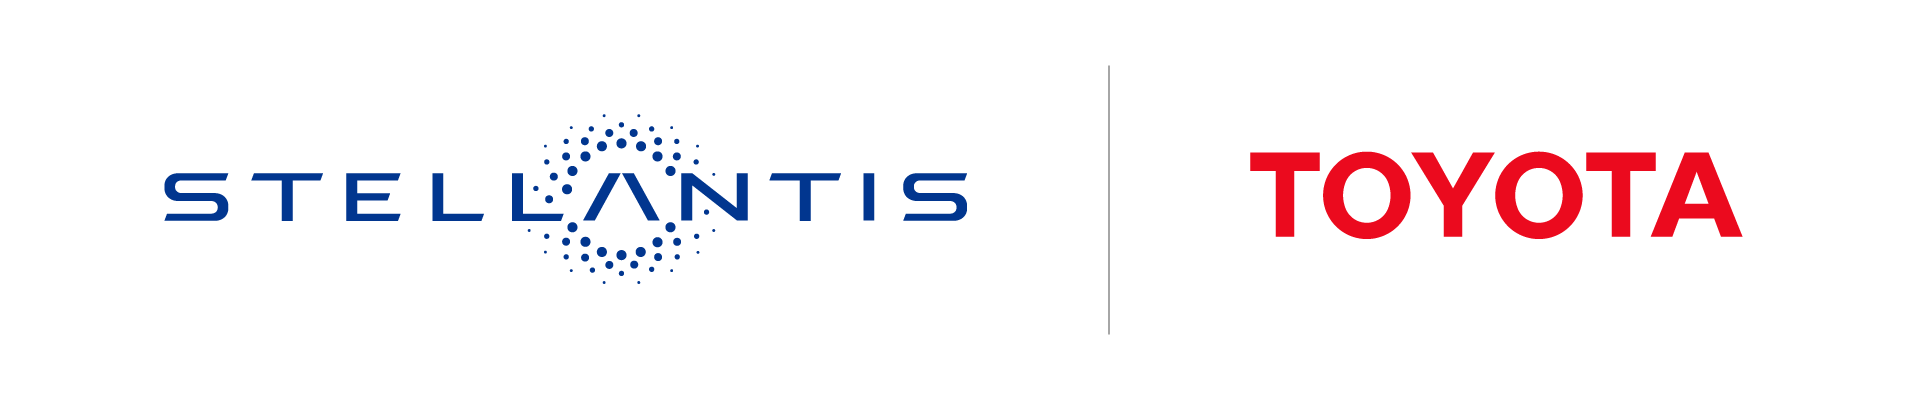 Stellantis Toyota logo